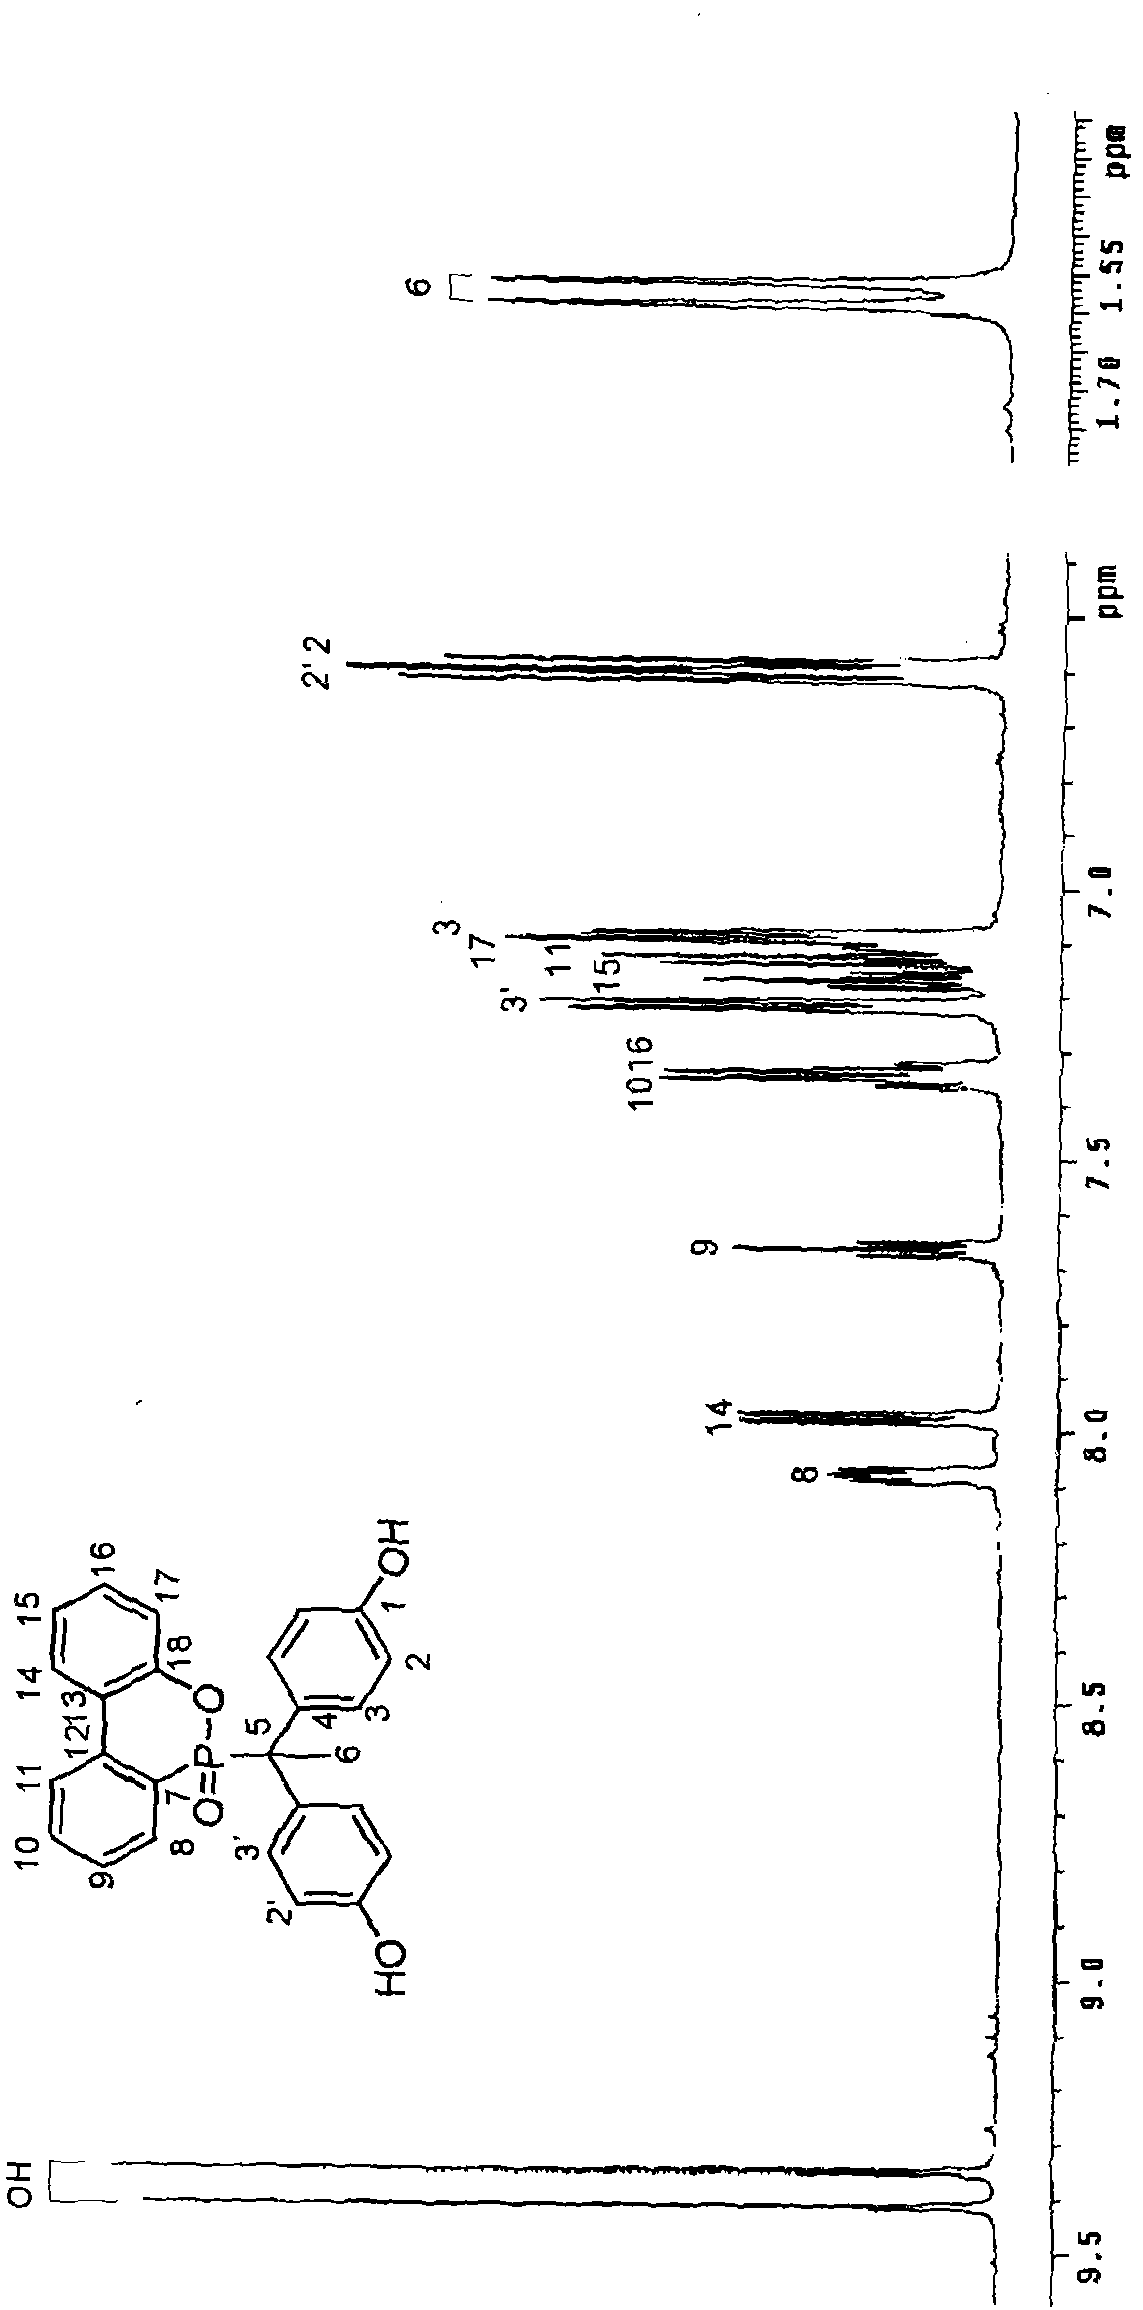 Novel phosphorus series bisphenols and manufacture method of derivatives thereof